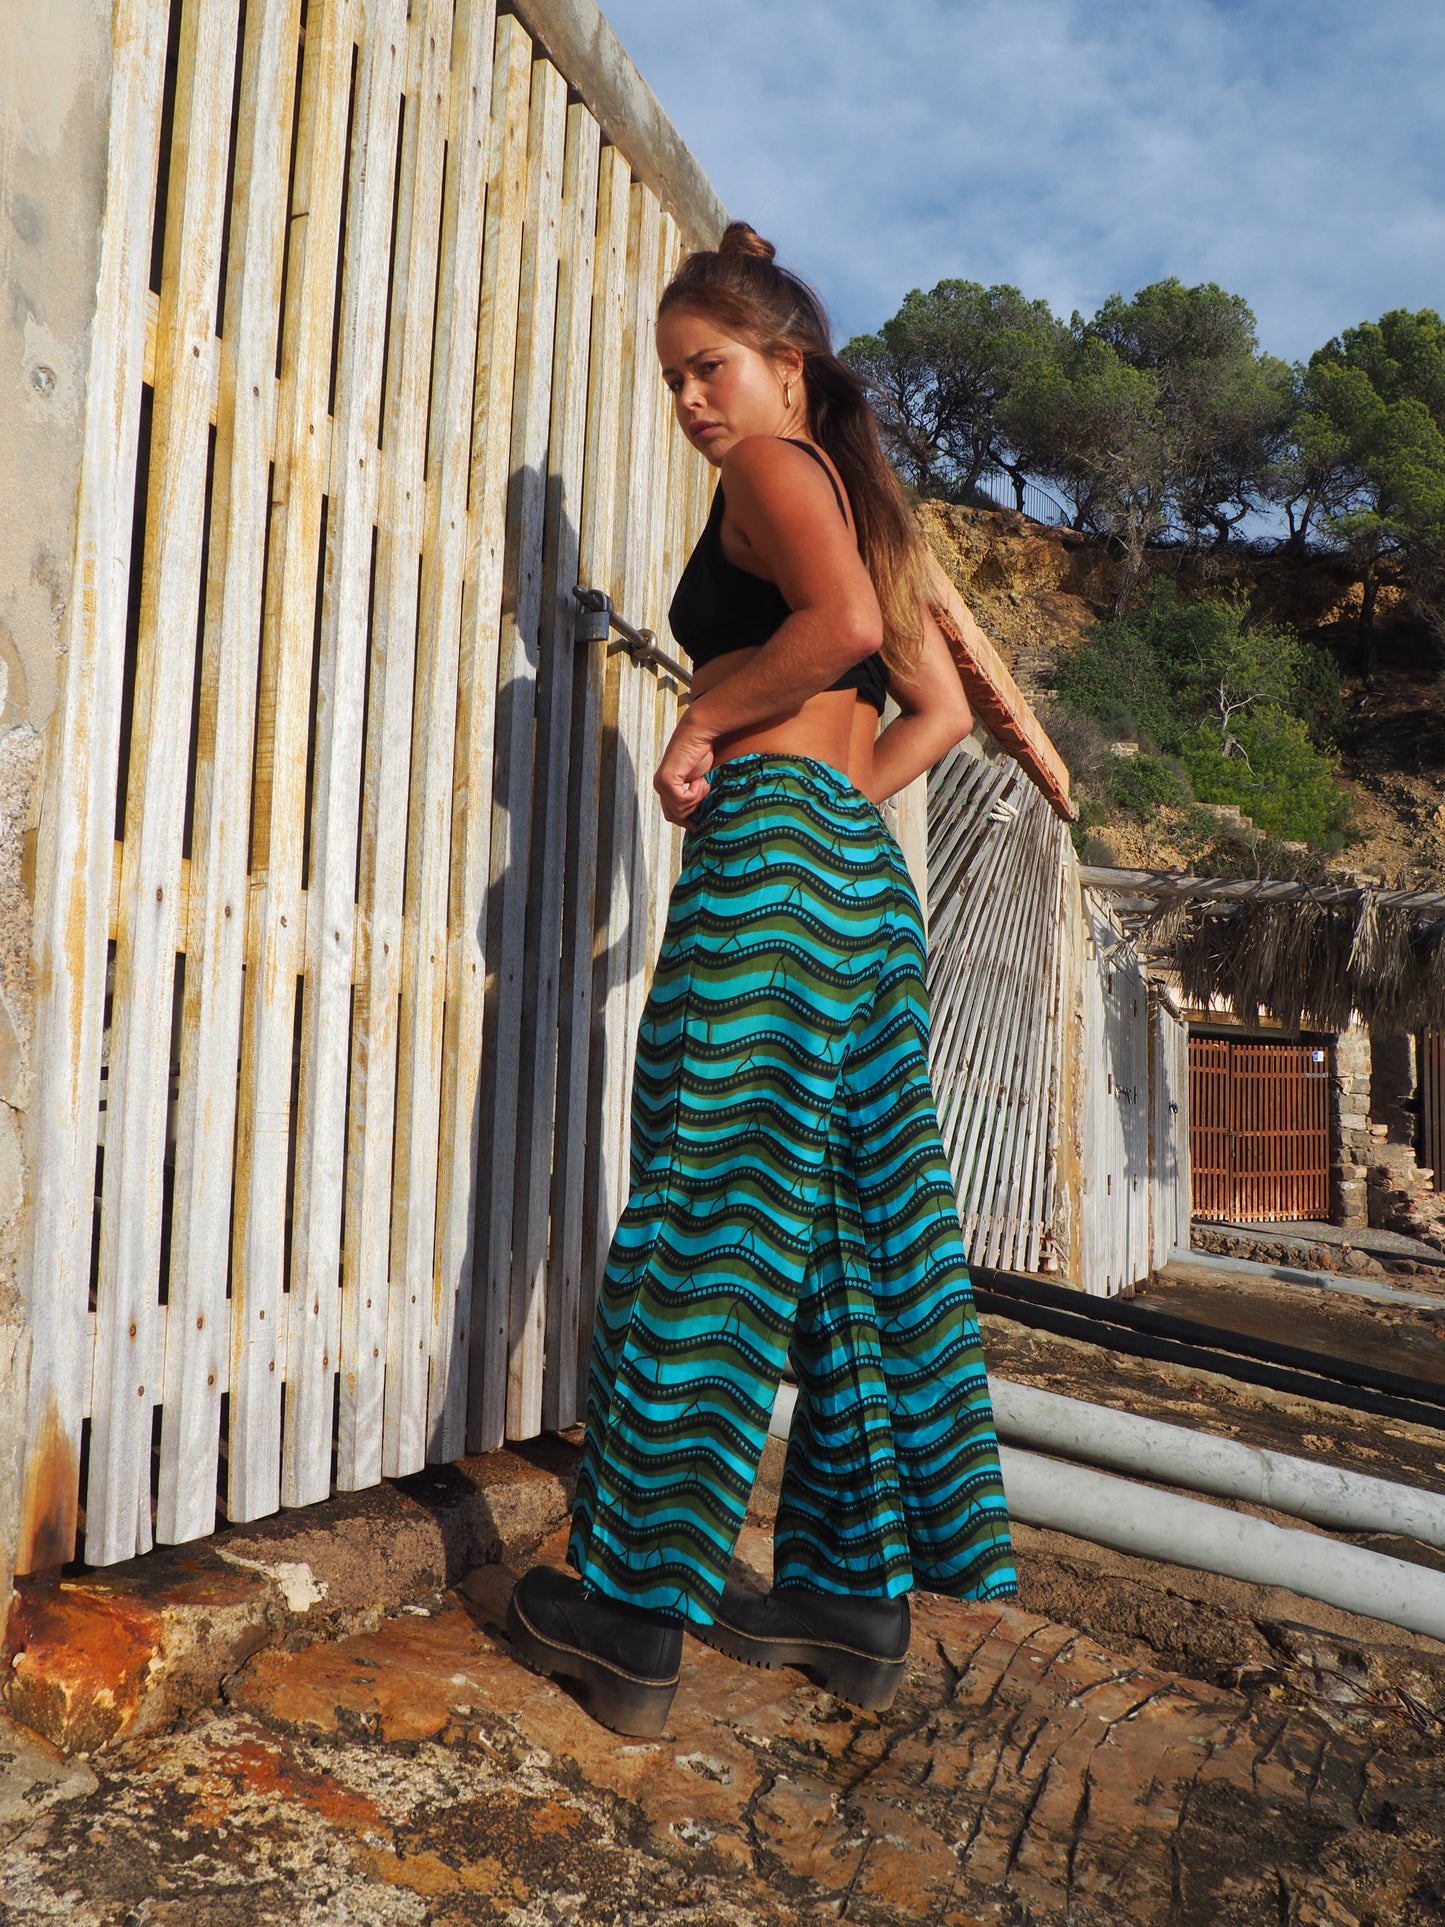 Screen printed blue and black wide leg pants made by Vagabond Ibiza